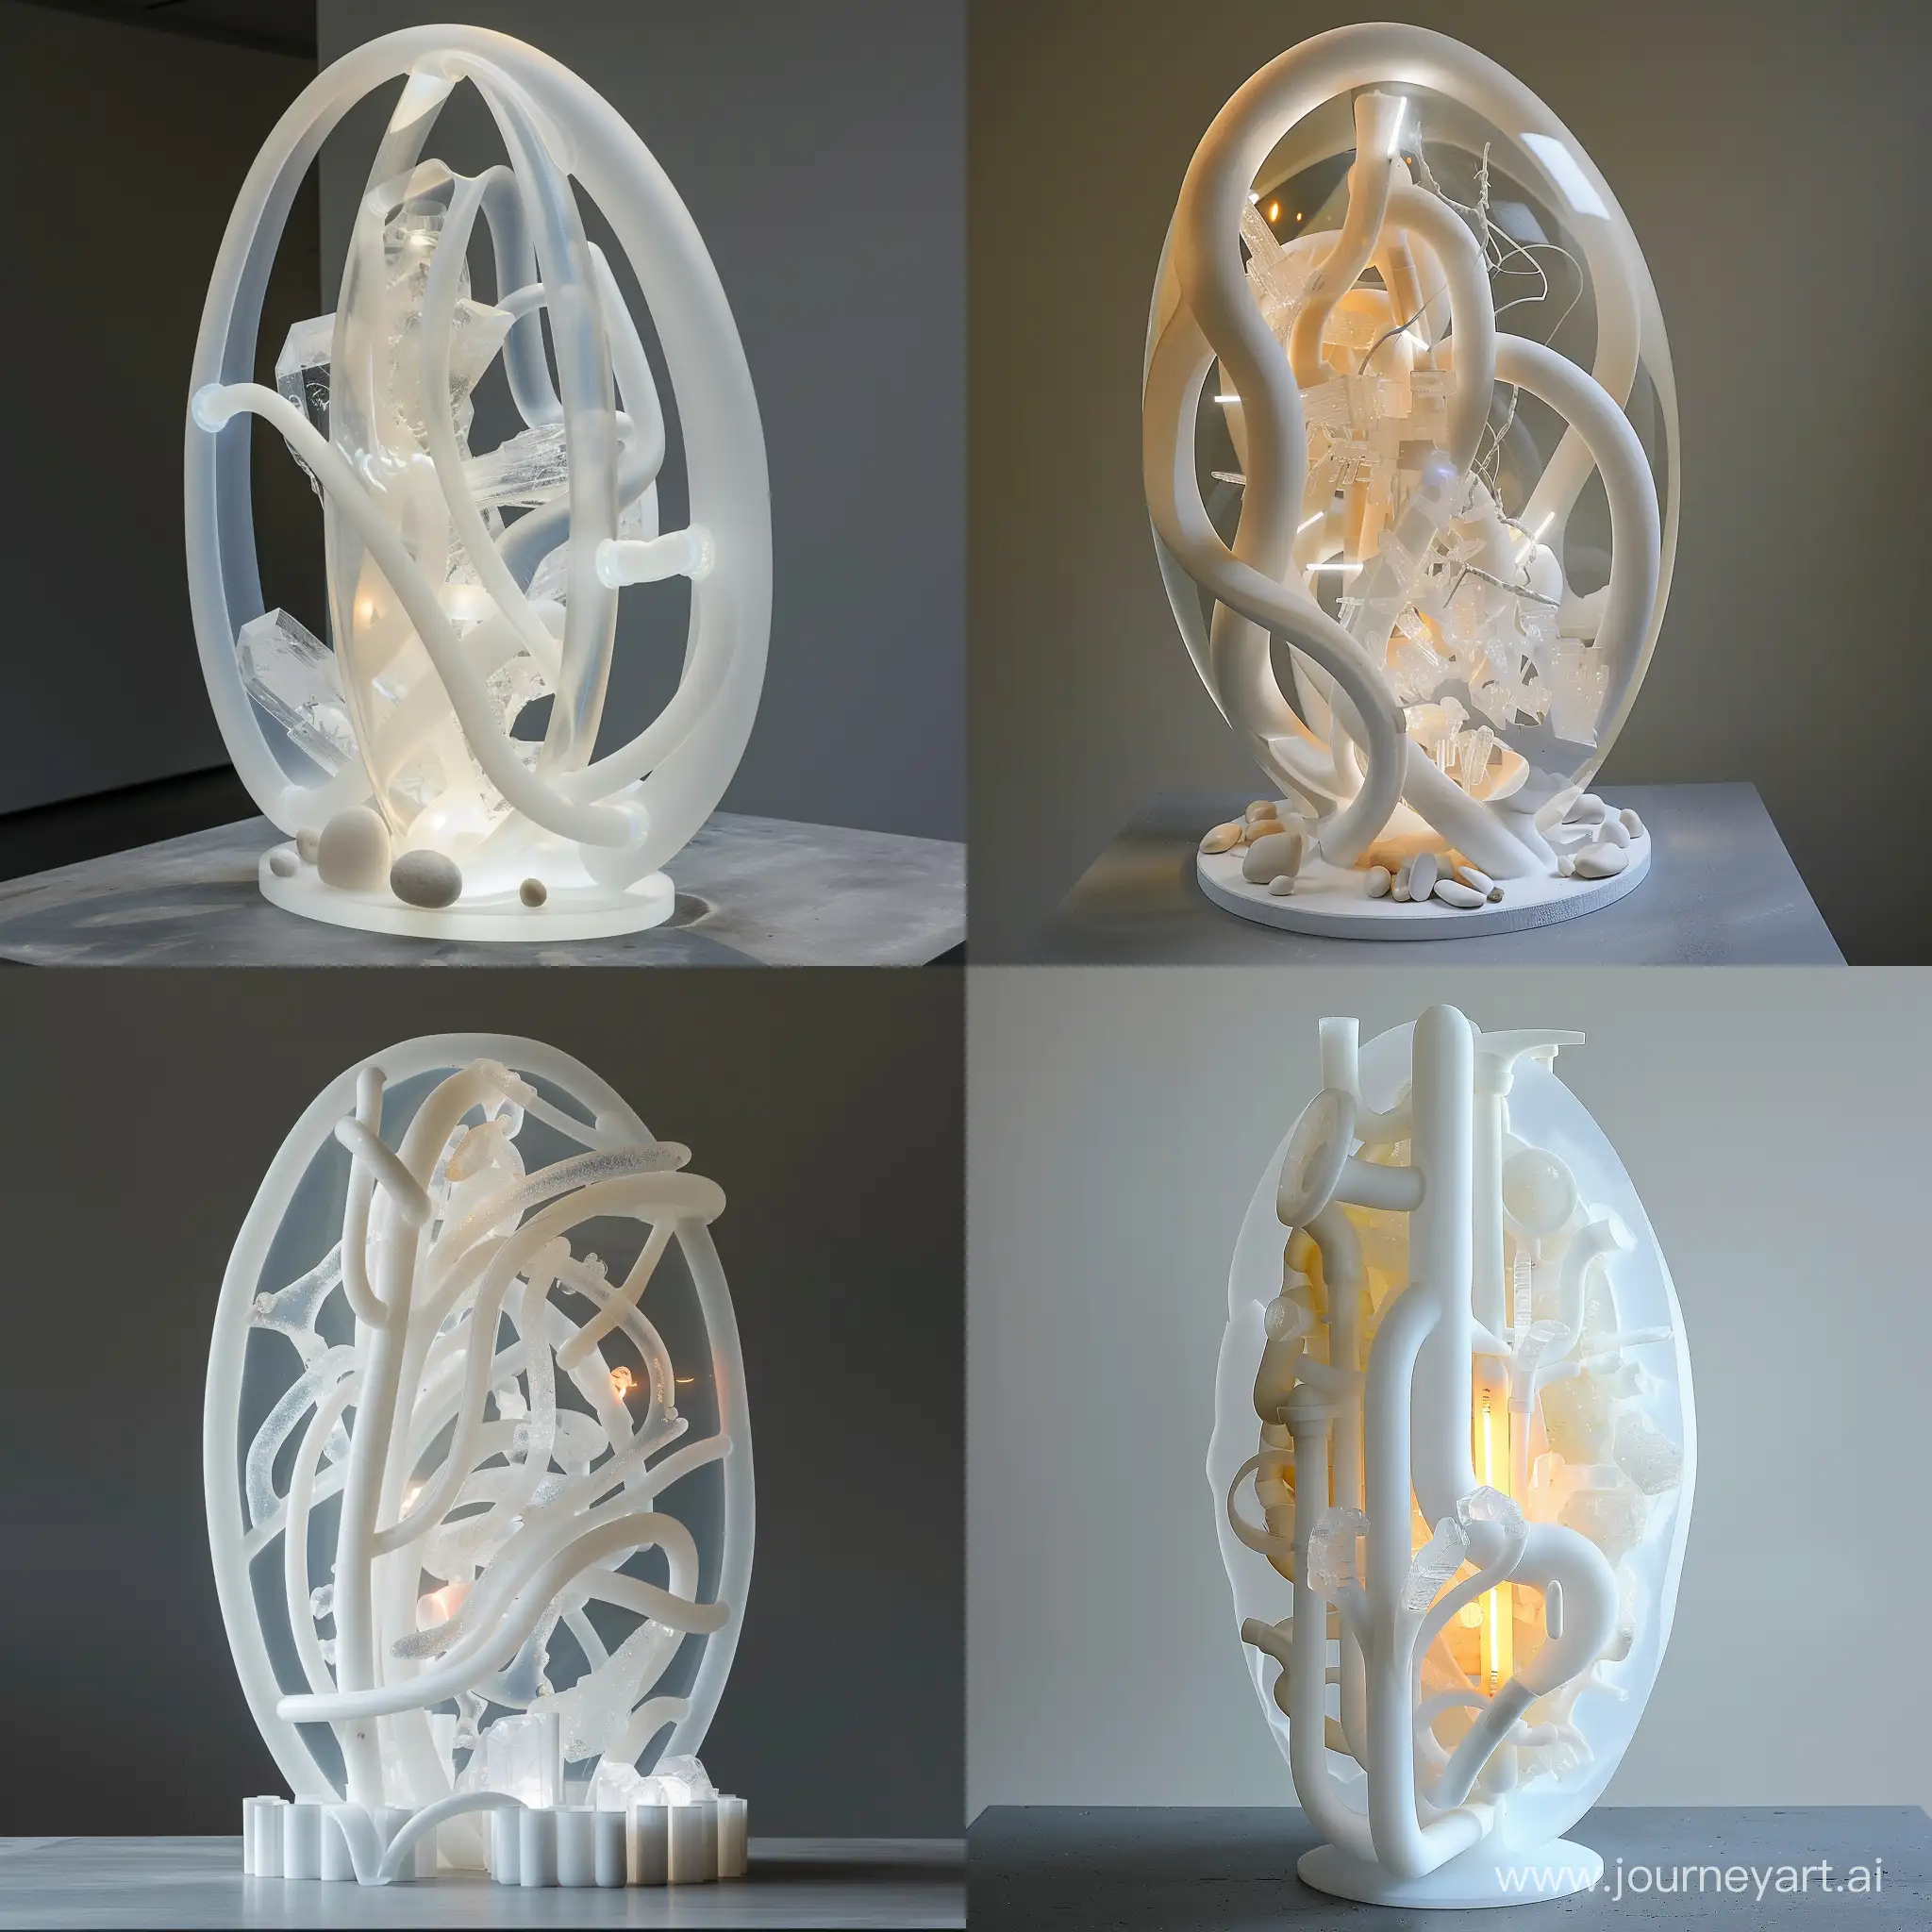 AvantGarde-Biomorphic-Sculpture-Translucent-White-Art-Installation-on-Gray-Table